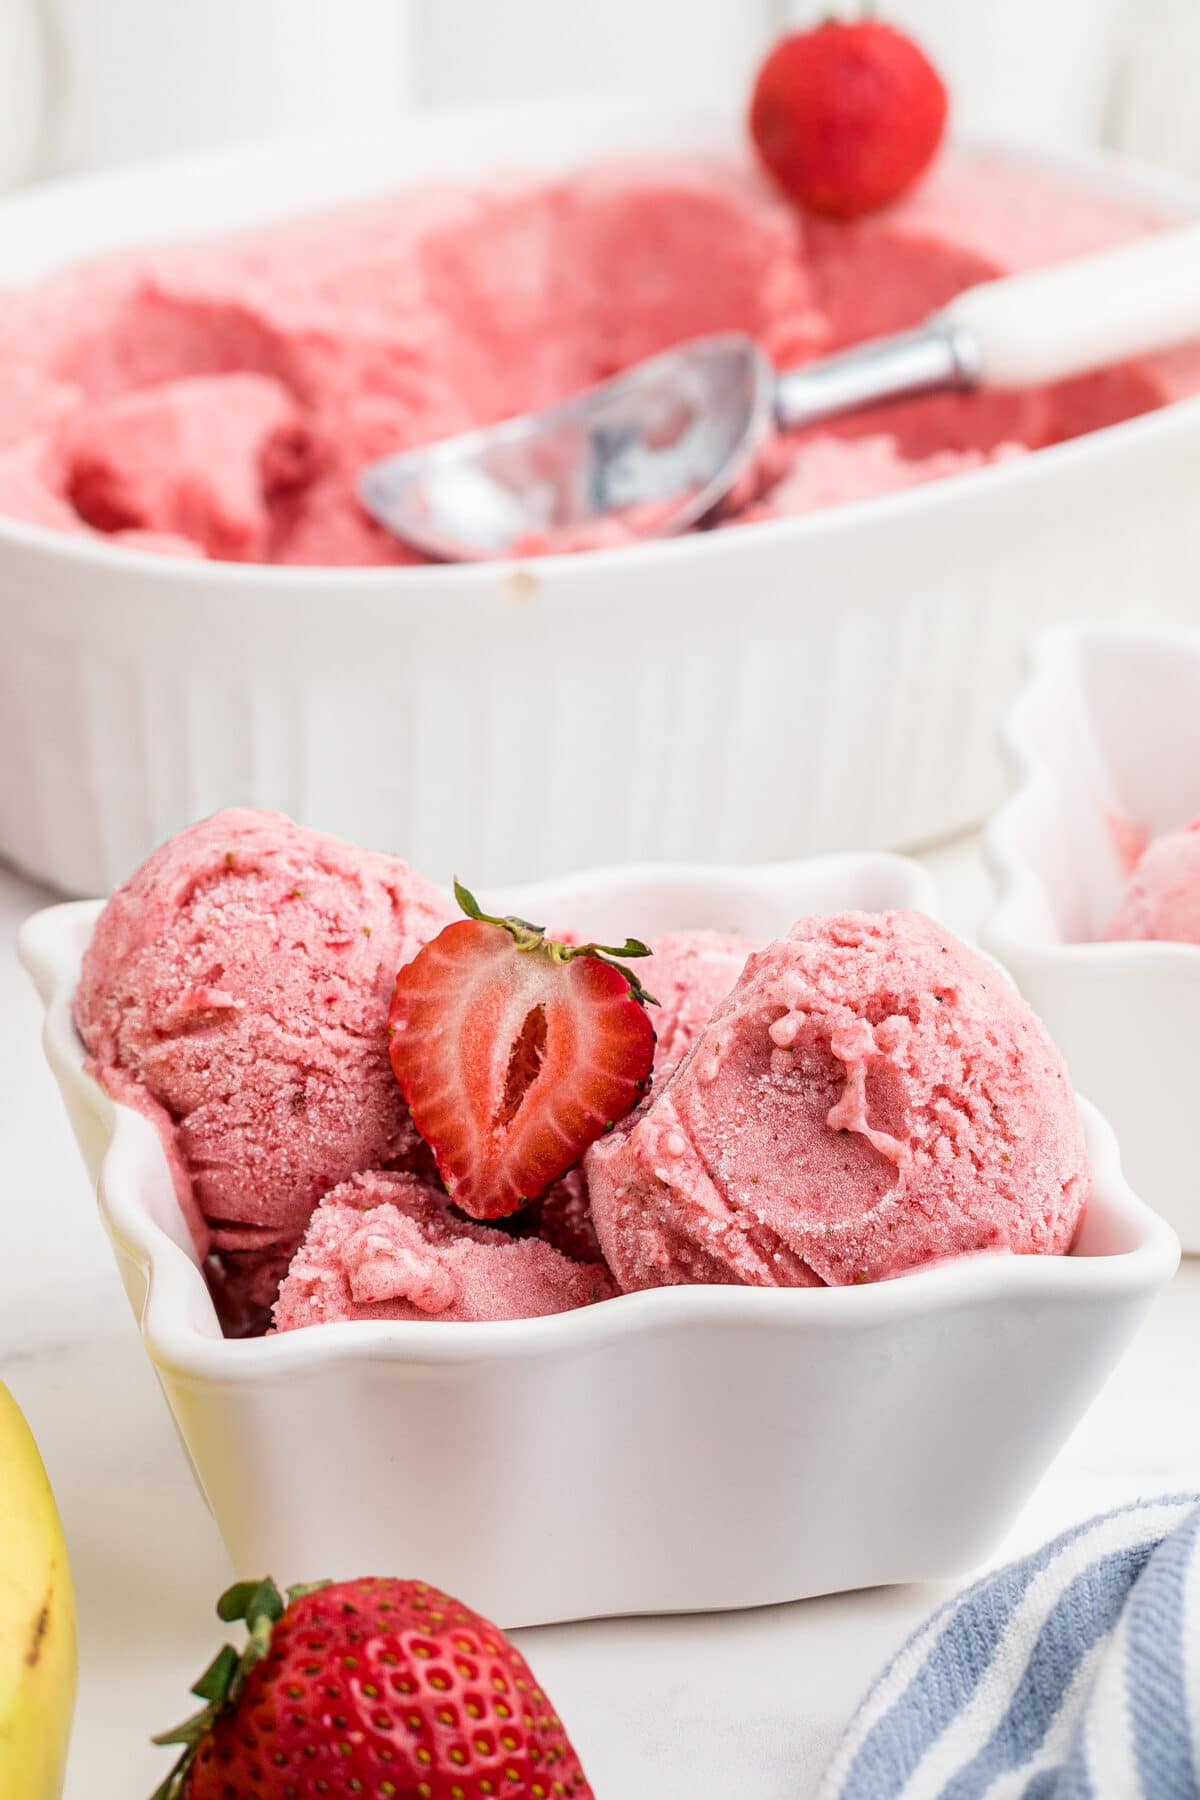 White plate with strawberry banana frozen yogurt and scoops of fresh strawberries